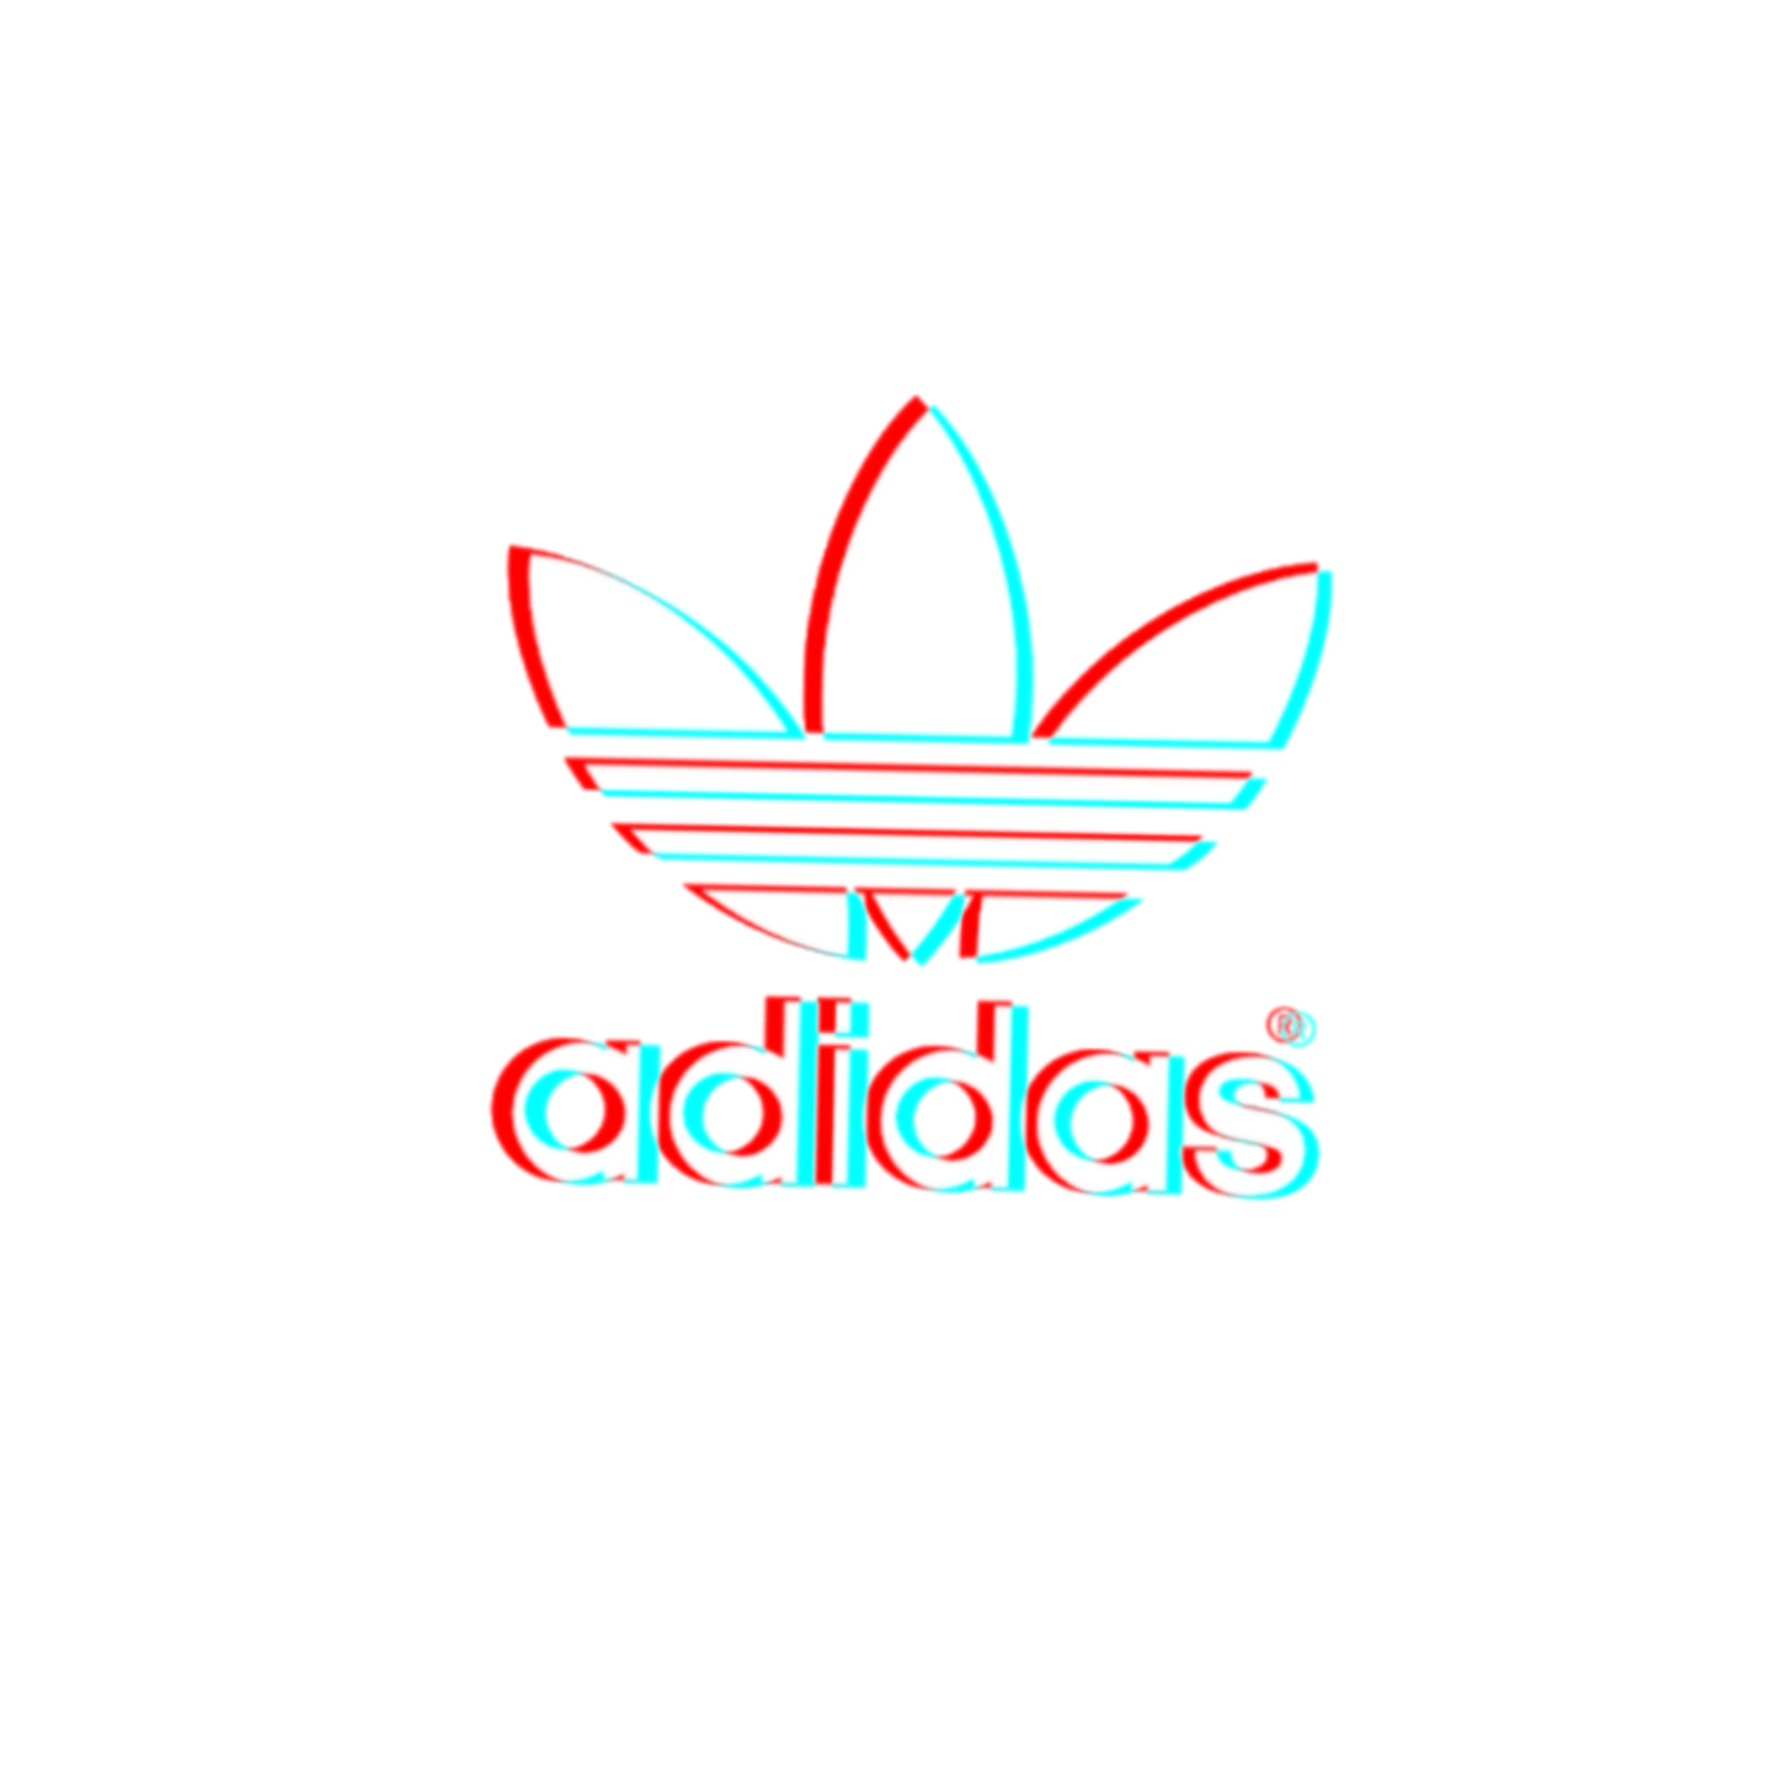 adidas sticker 3dtext 3d sticker by @abrtmsyislove